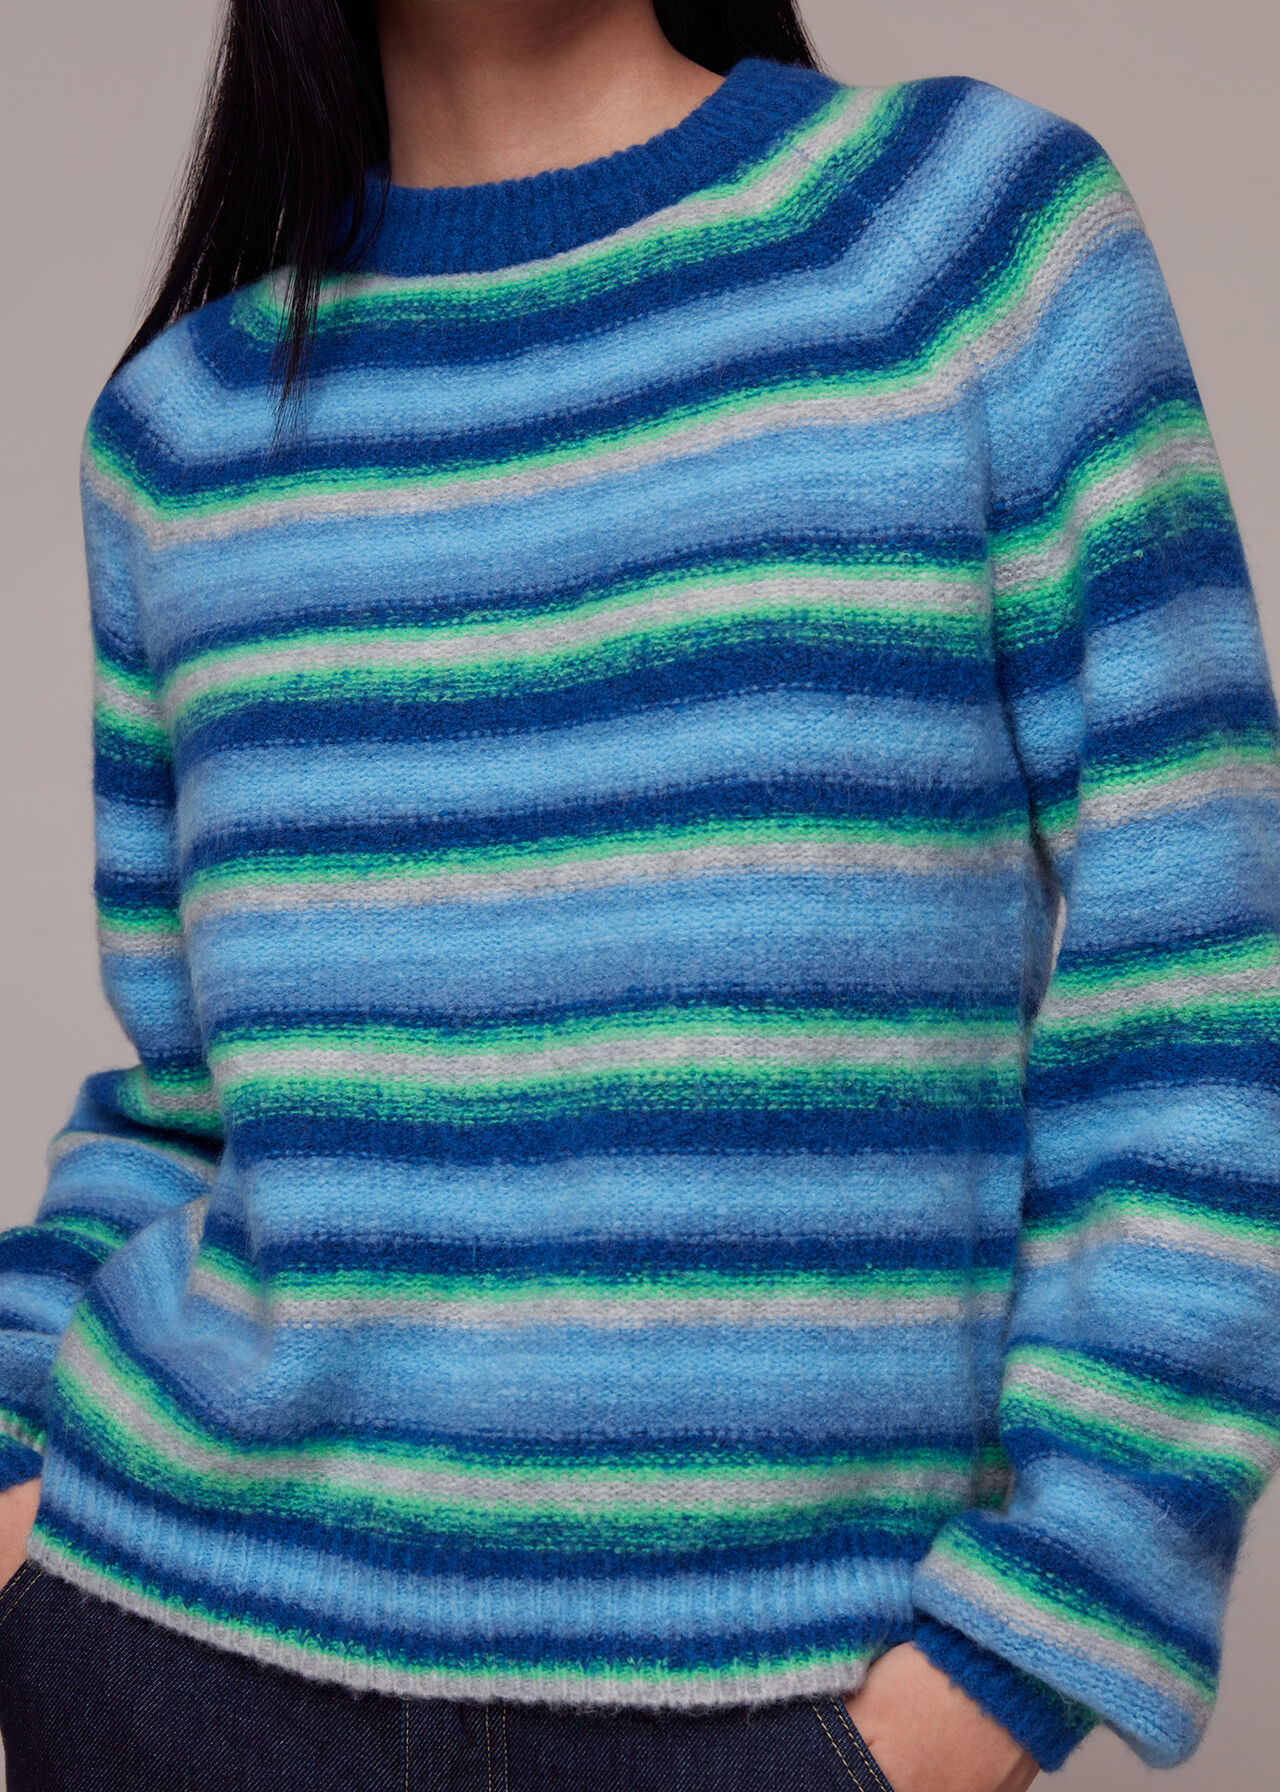 Variated Stripe Sweater